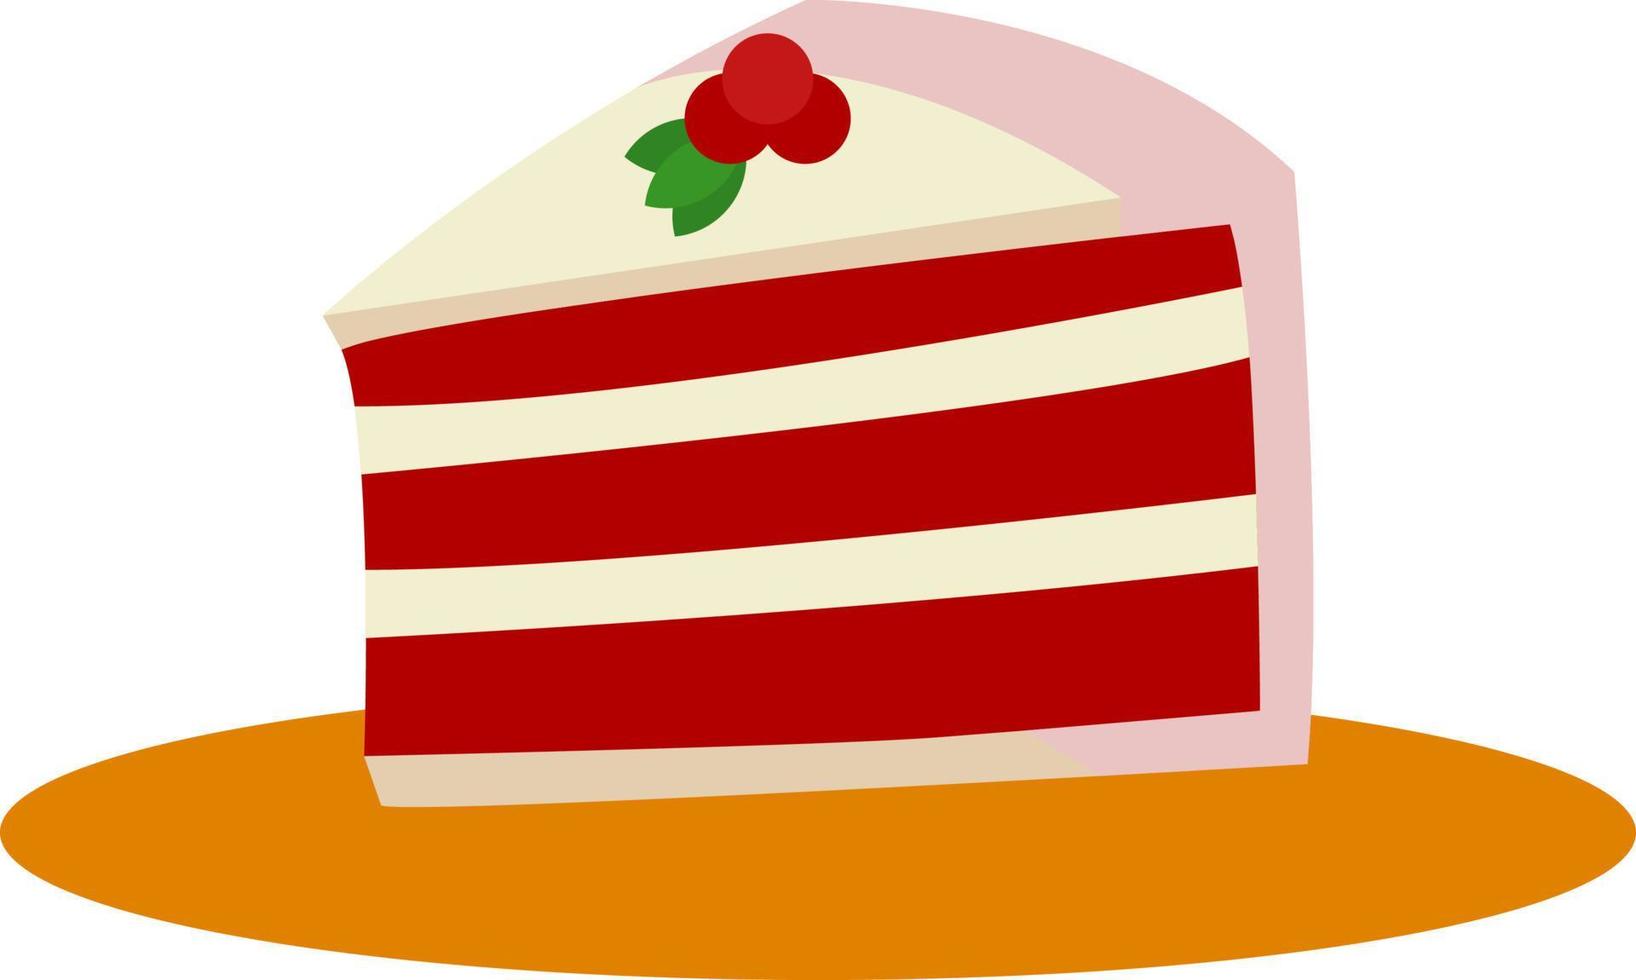 röd kaka, illustration, vektor på vit bakgrund.